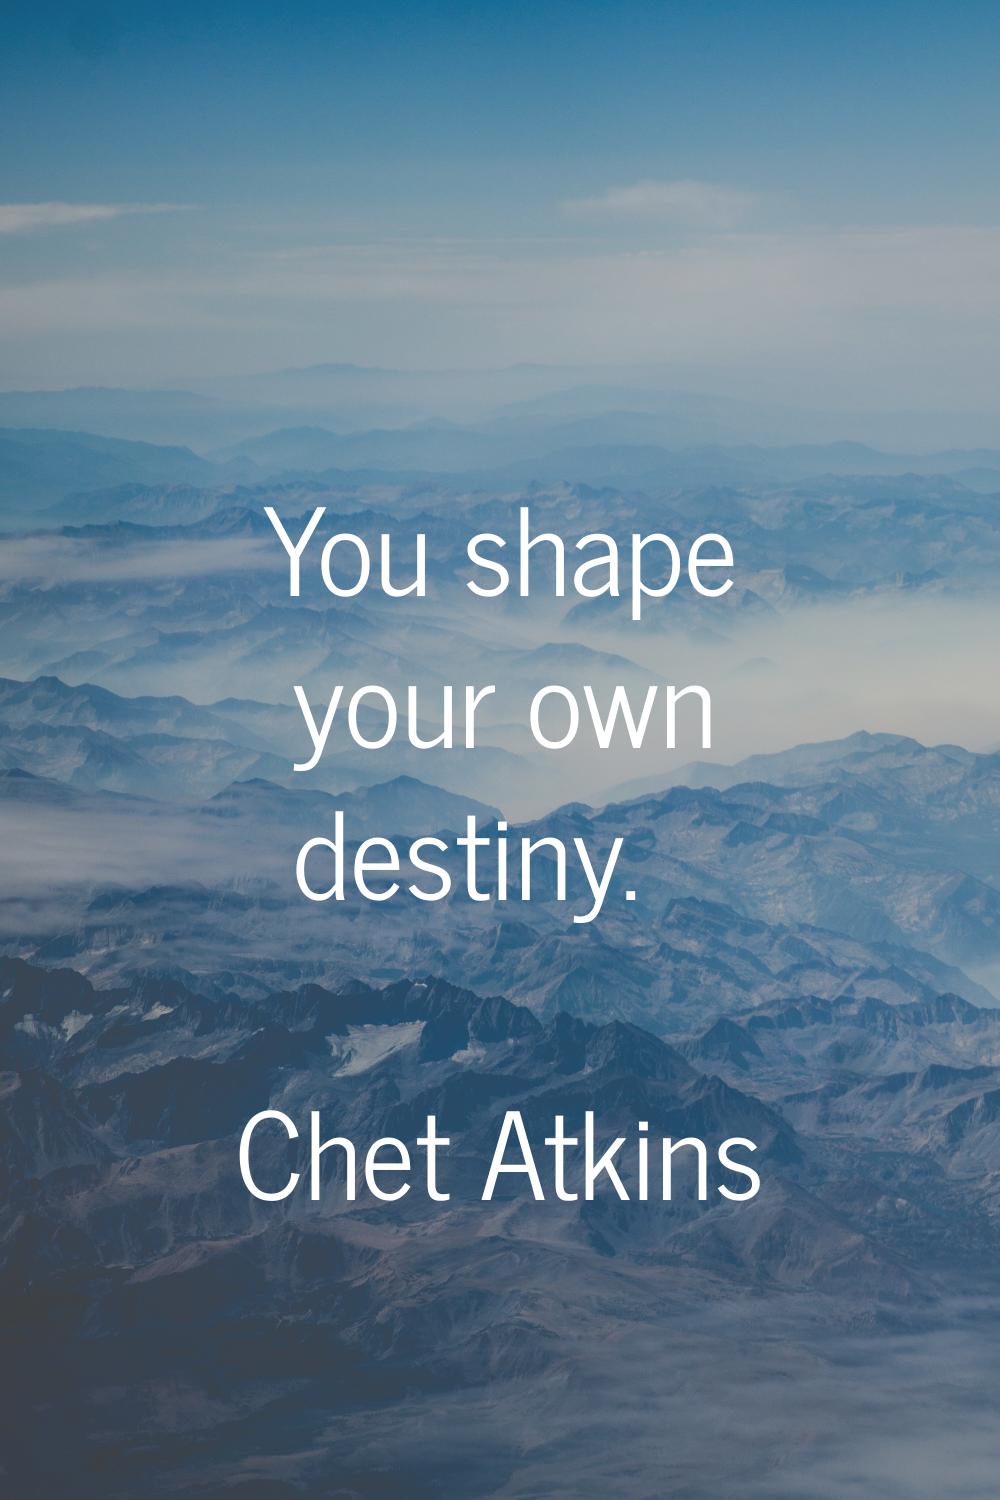 You shape your own destiny.